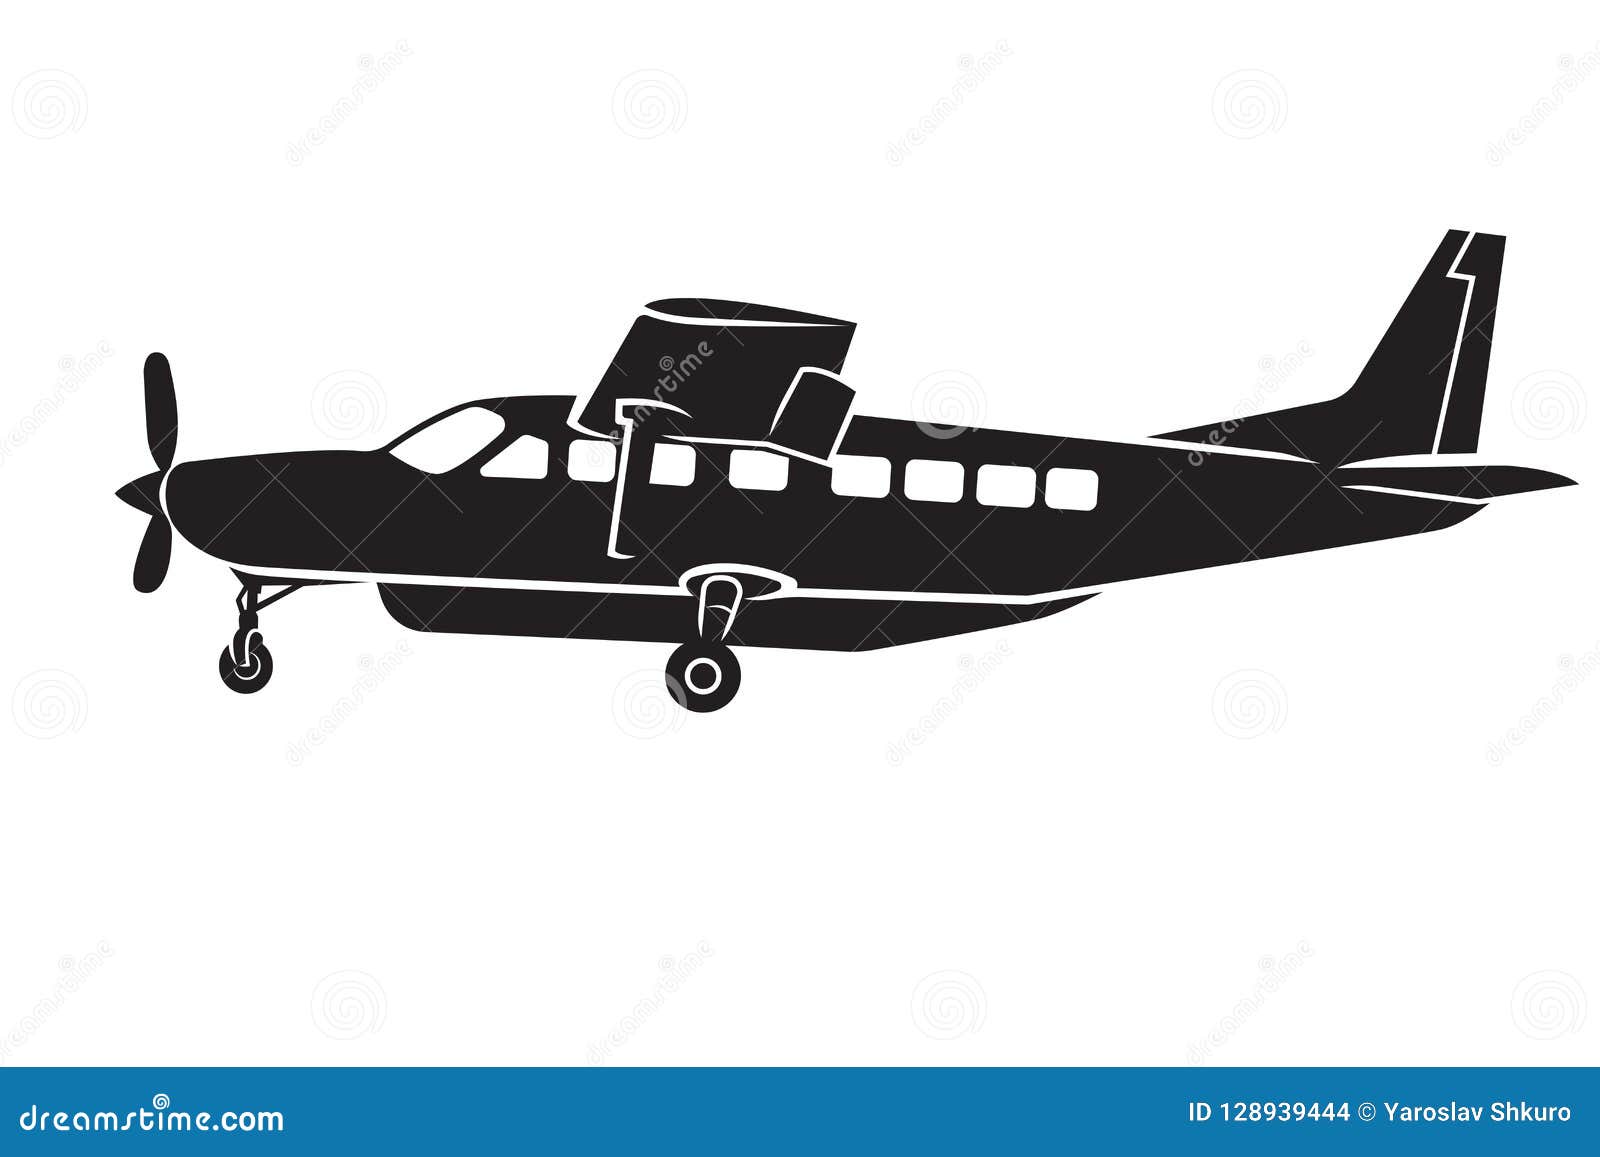 single prop passenger plane)